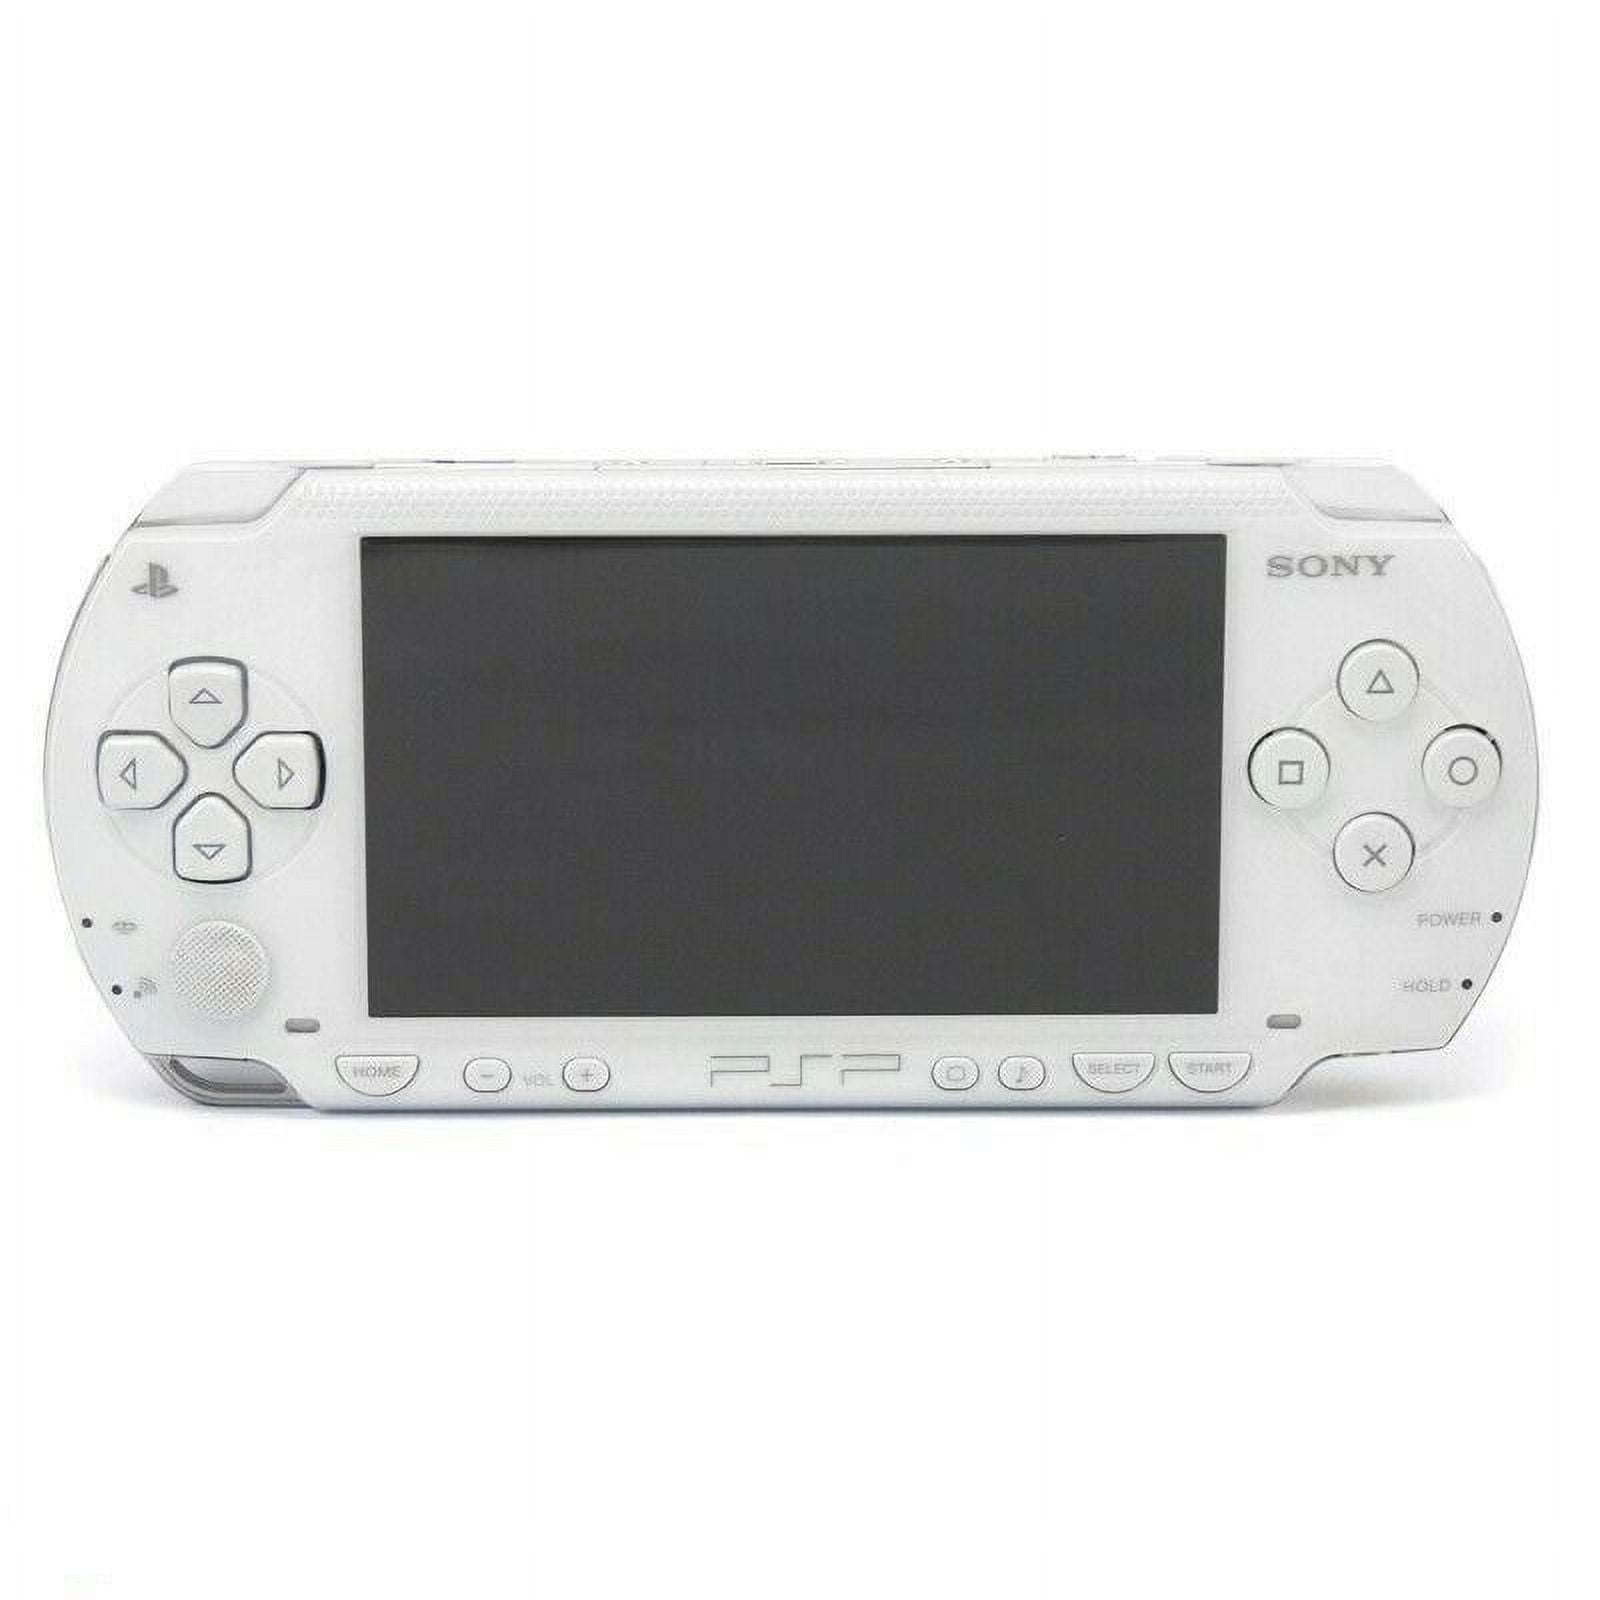 Sony Playstation Portable PSP 1000 White Used - Walmart.com